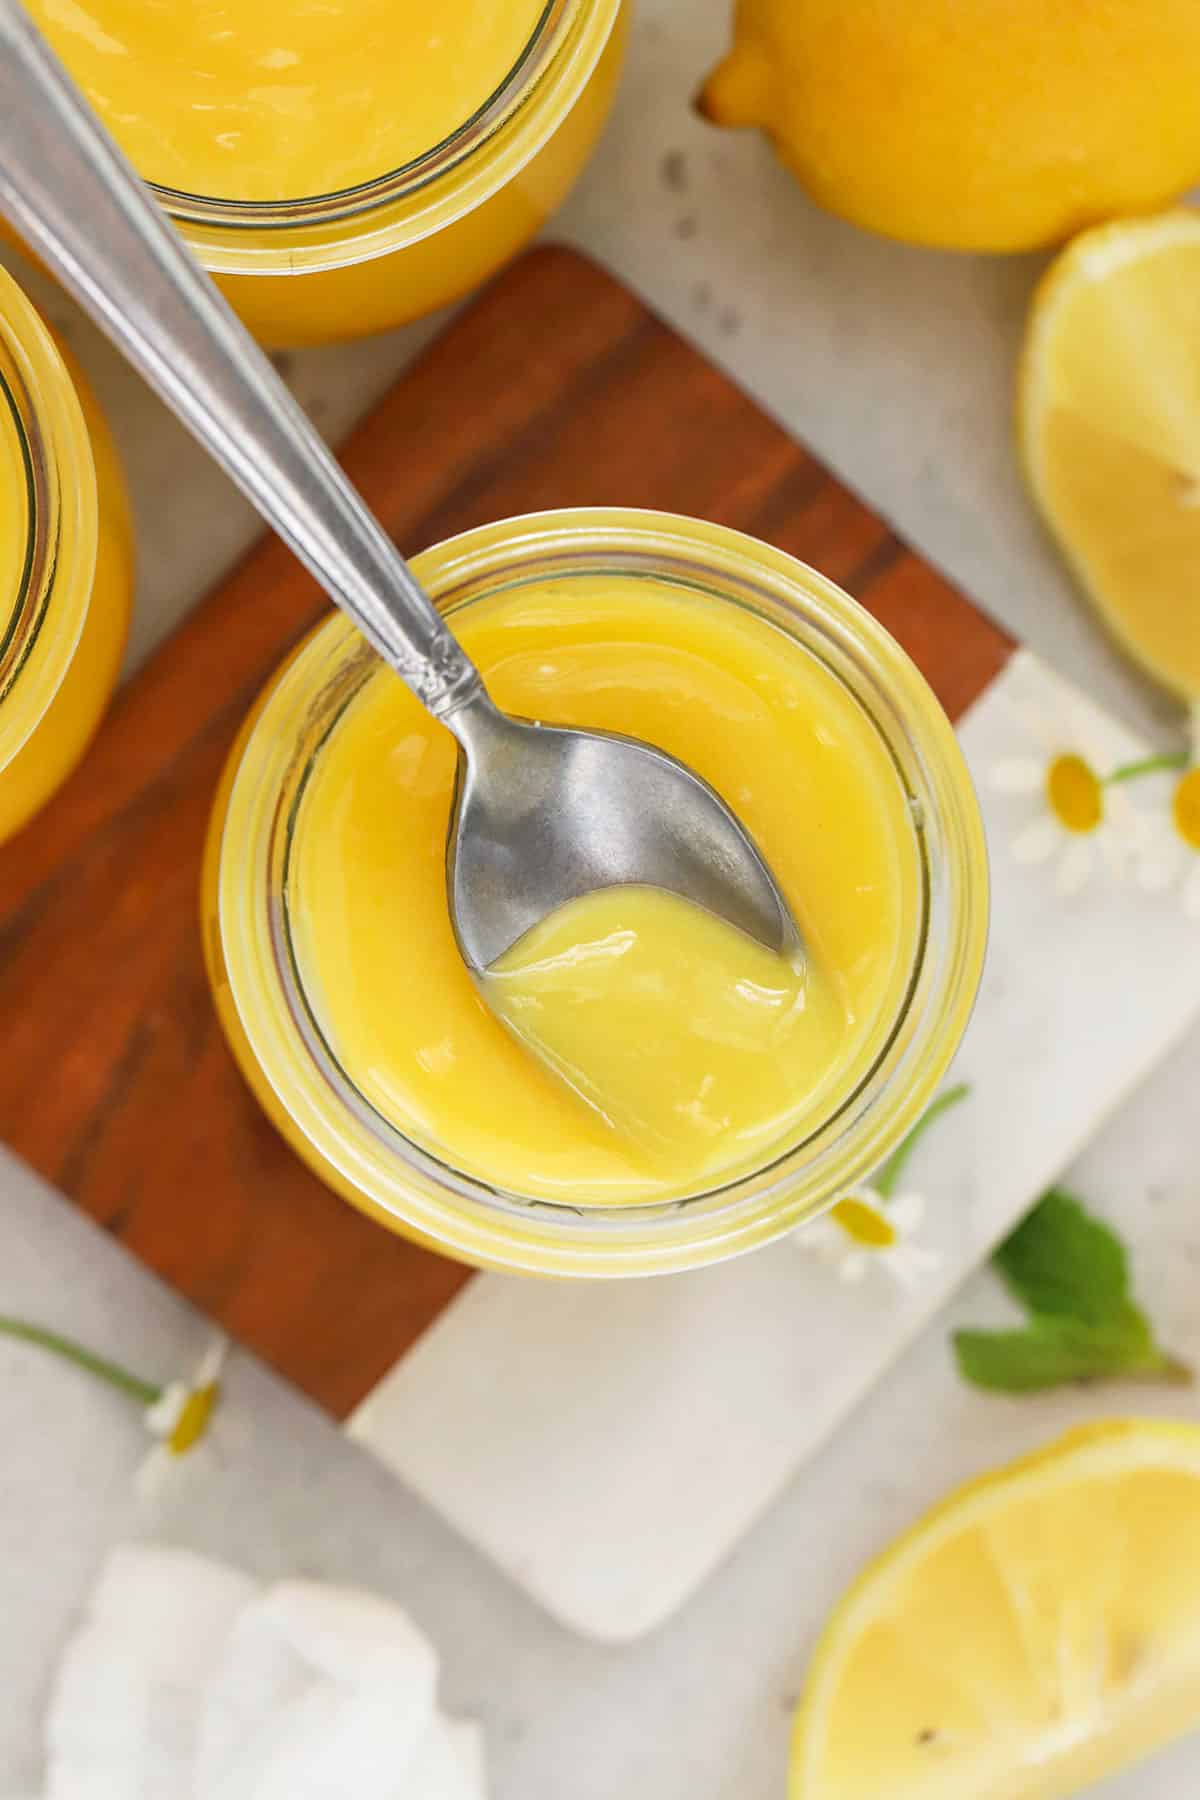 homemade lemon curd in a jar